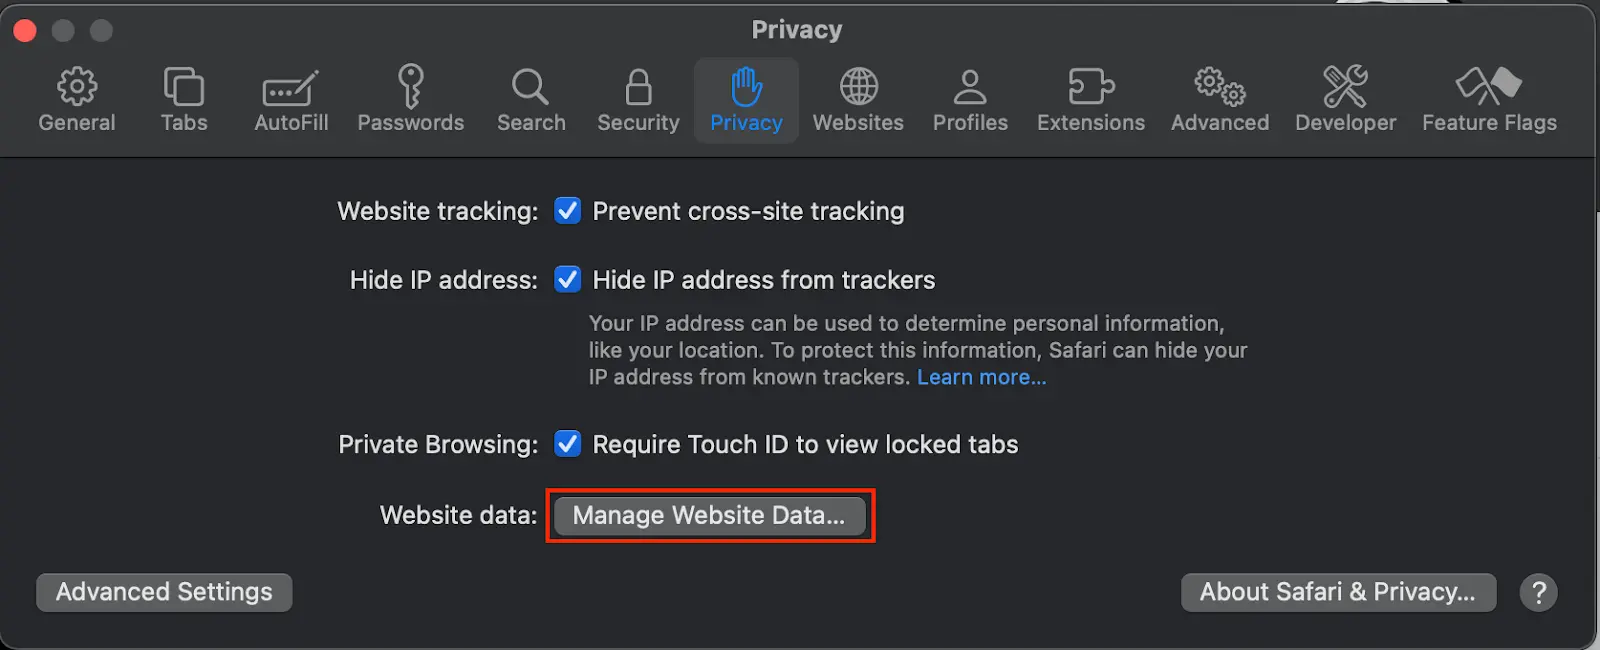 safari-app-preferences-privacy